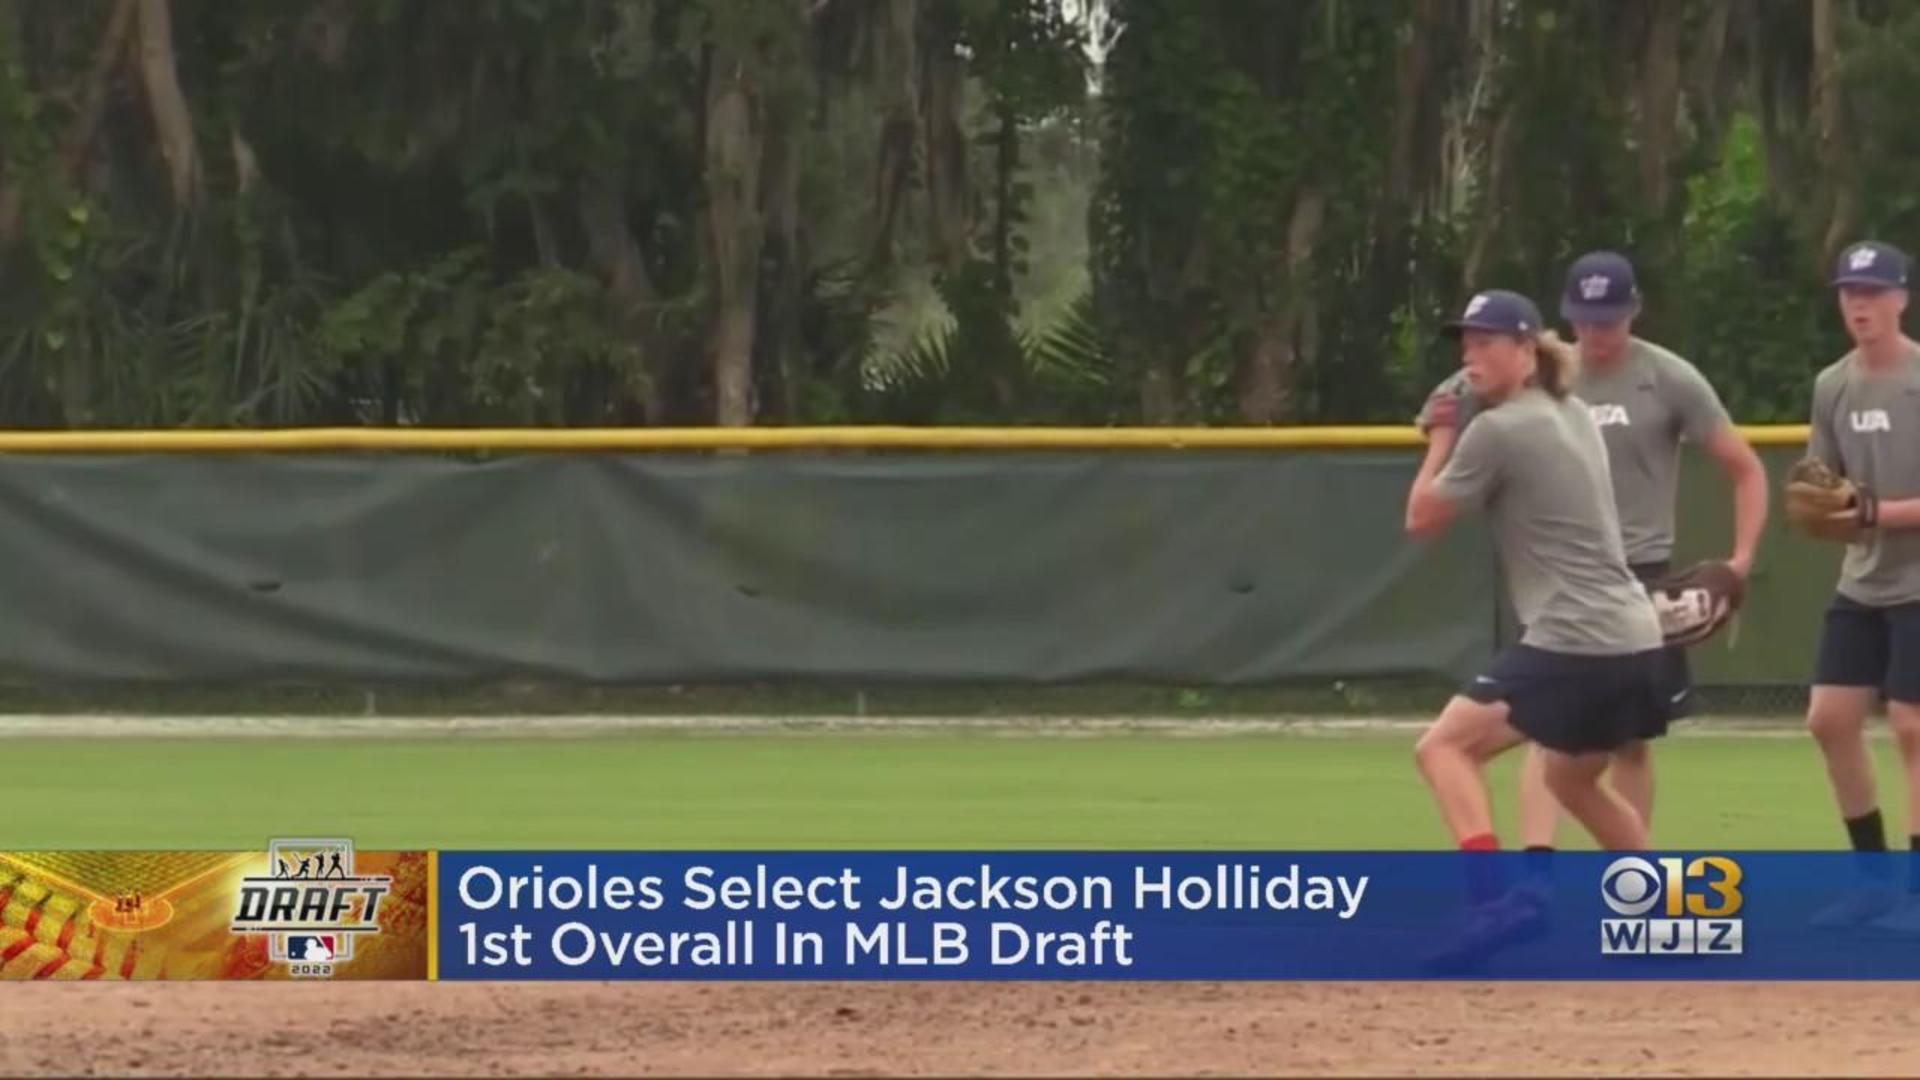 Orioles select Jackson Holliday, son of Matt, 1st overall